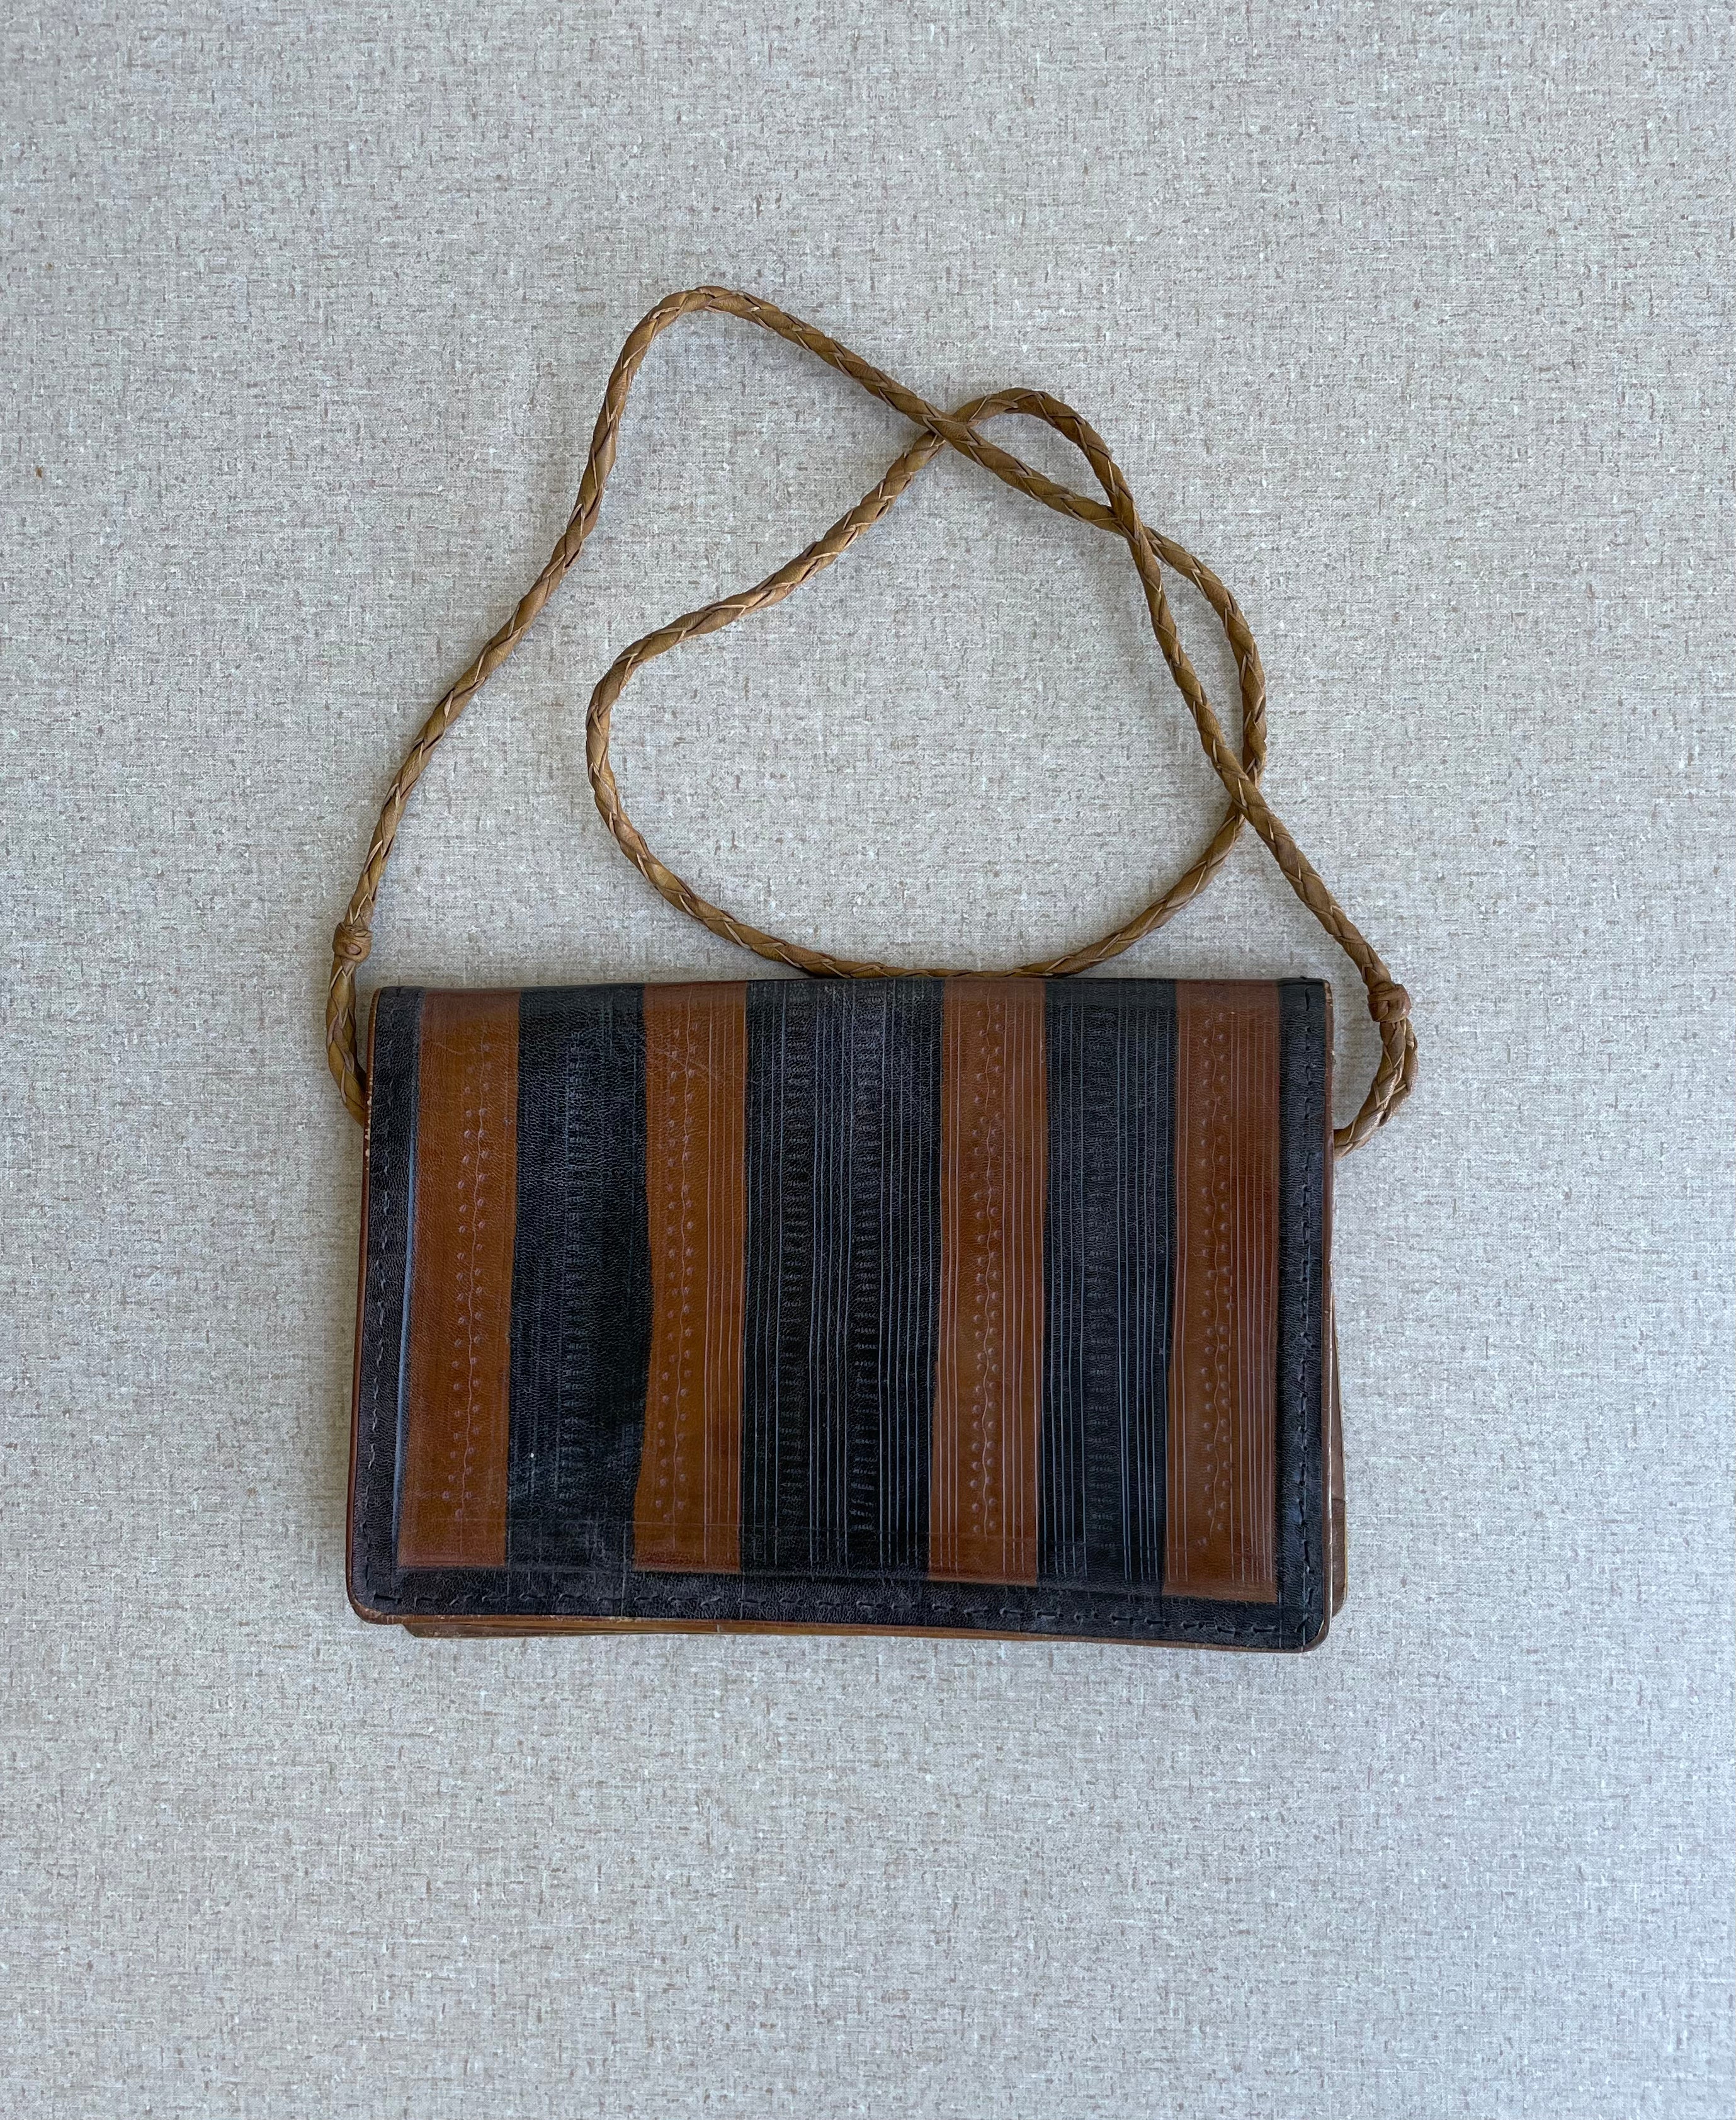 Handcrafted Bags - African Art - Accessories - Women - Handbag -  Shoulder - Clutch - Leather - Tribal 